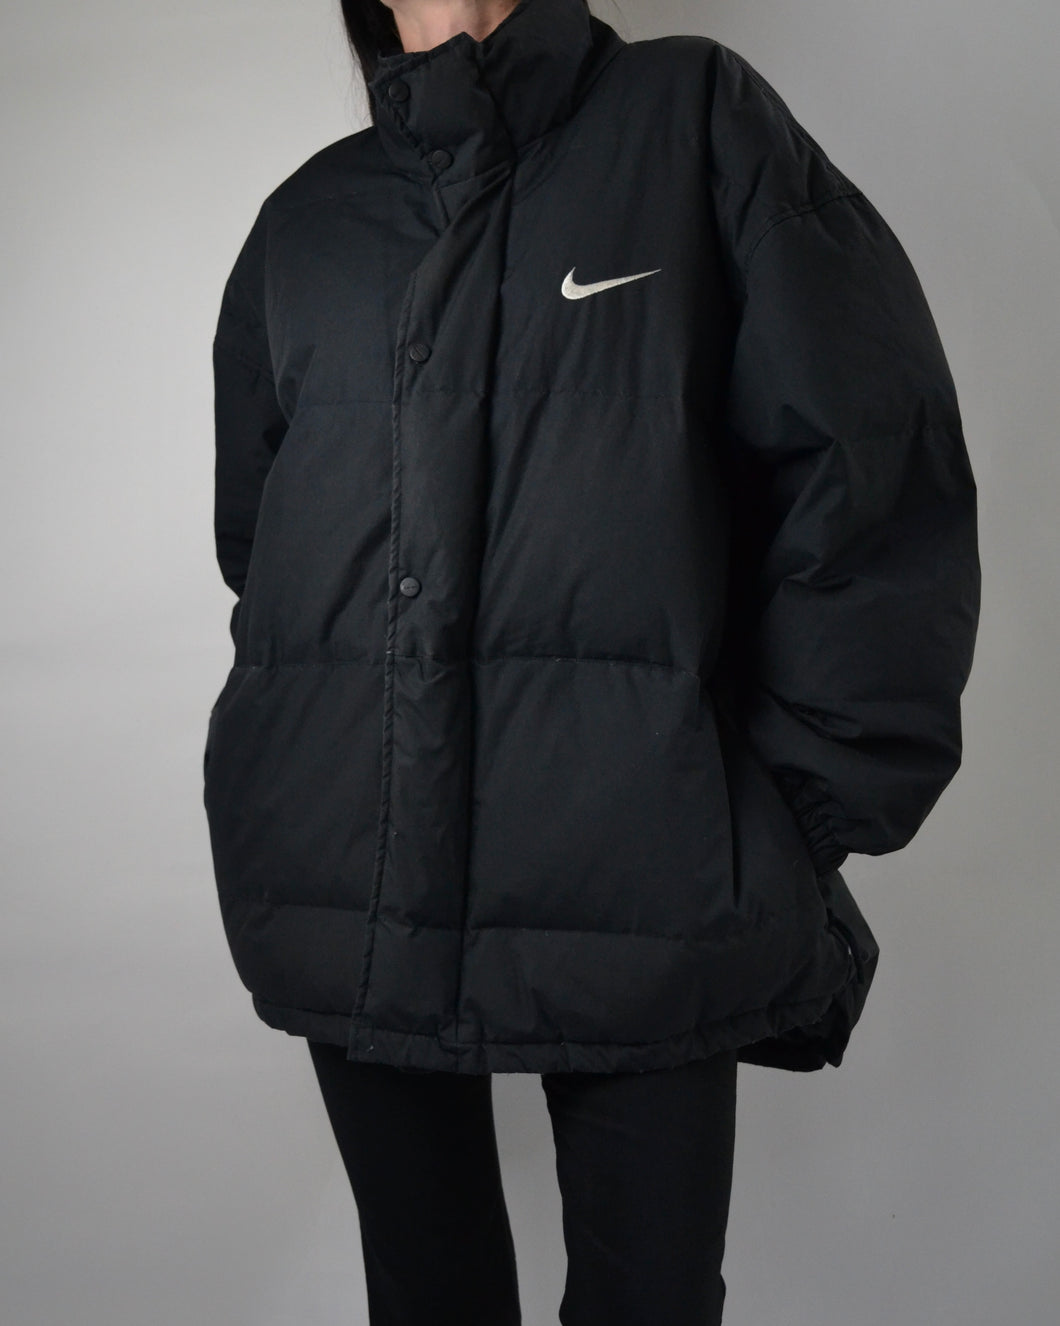 Black Nike Puffer Jacket